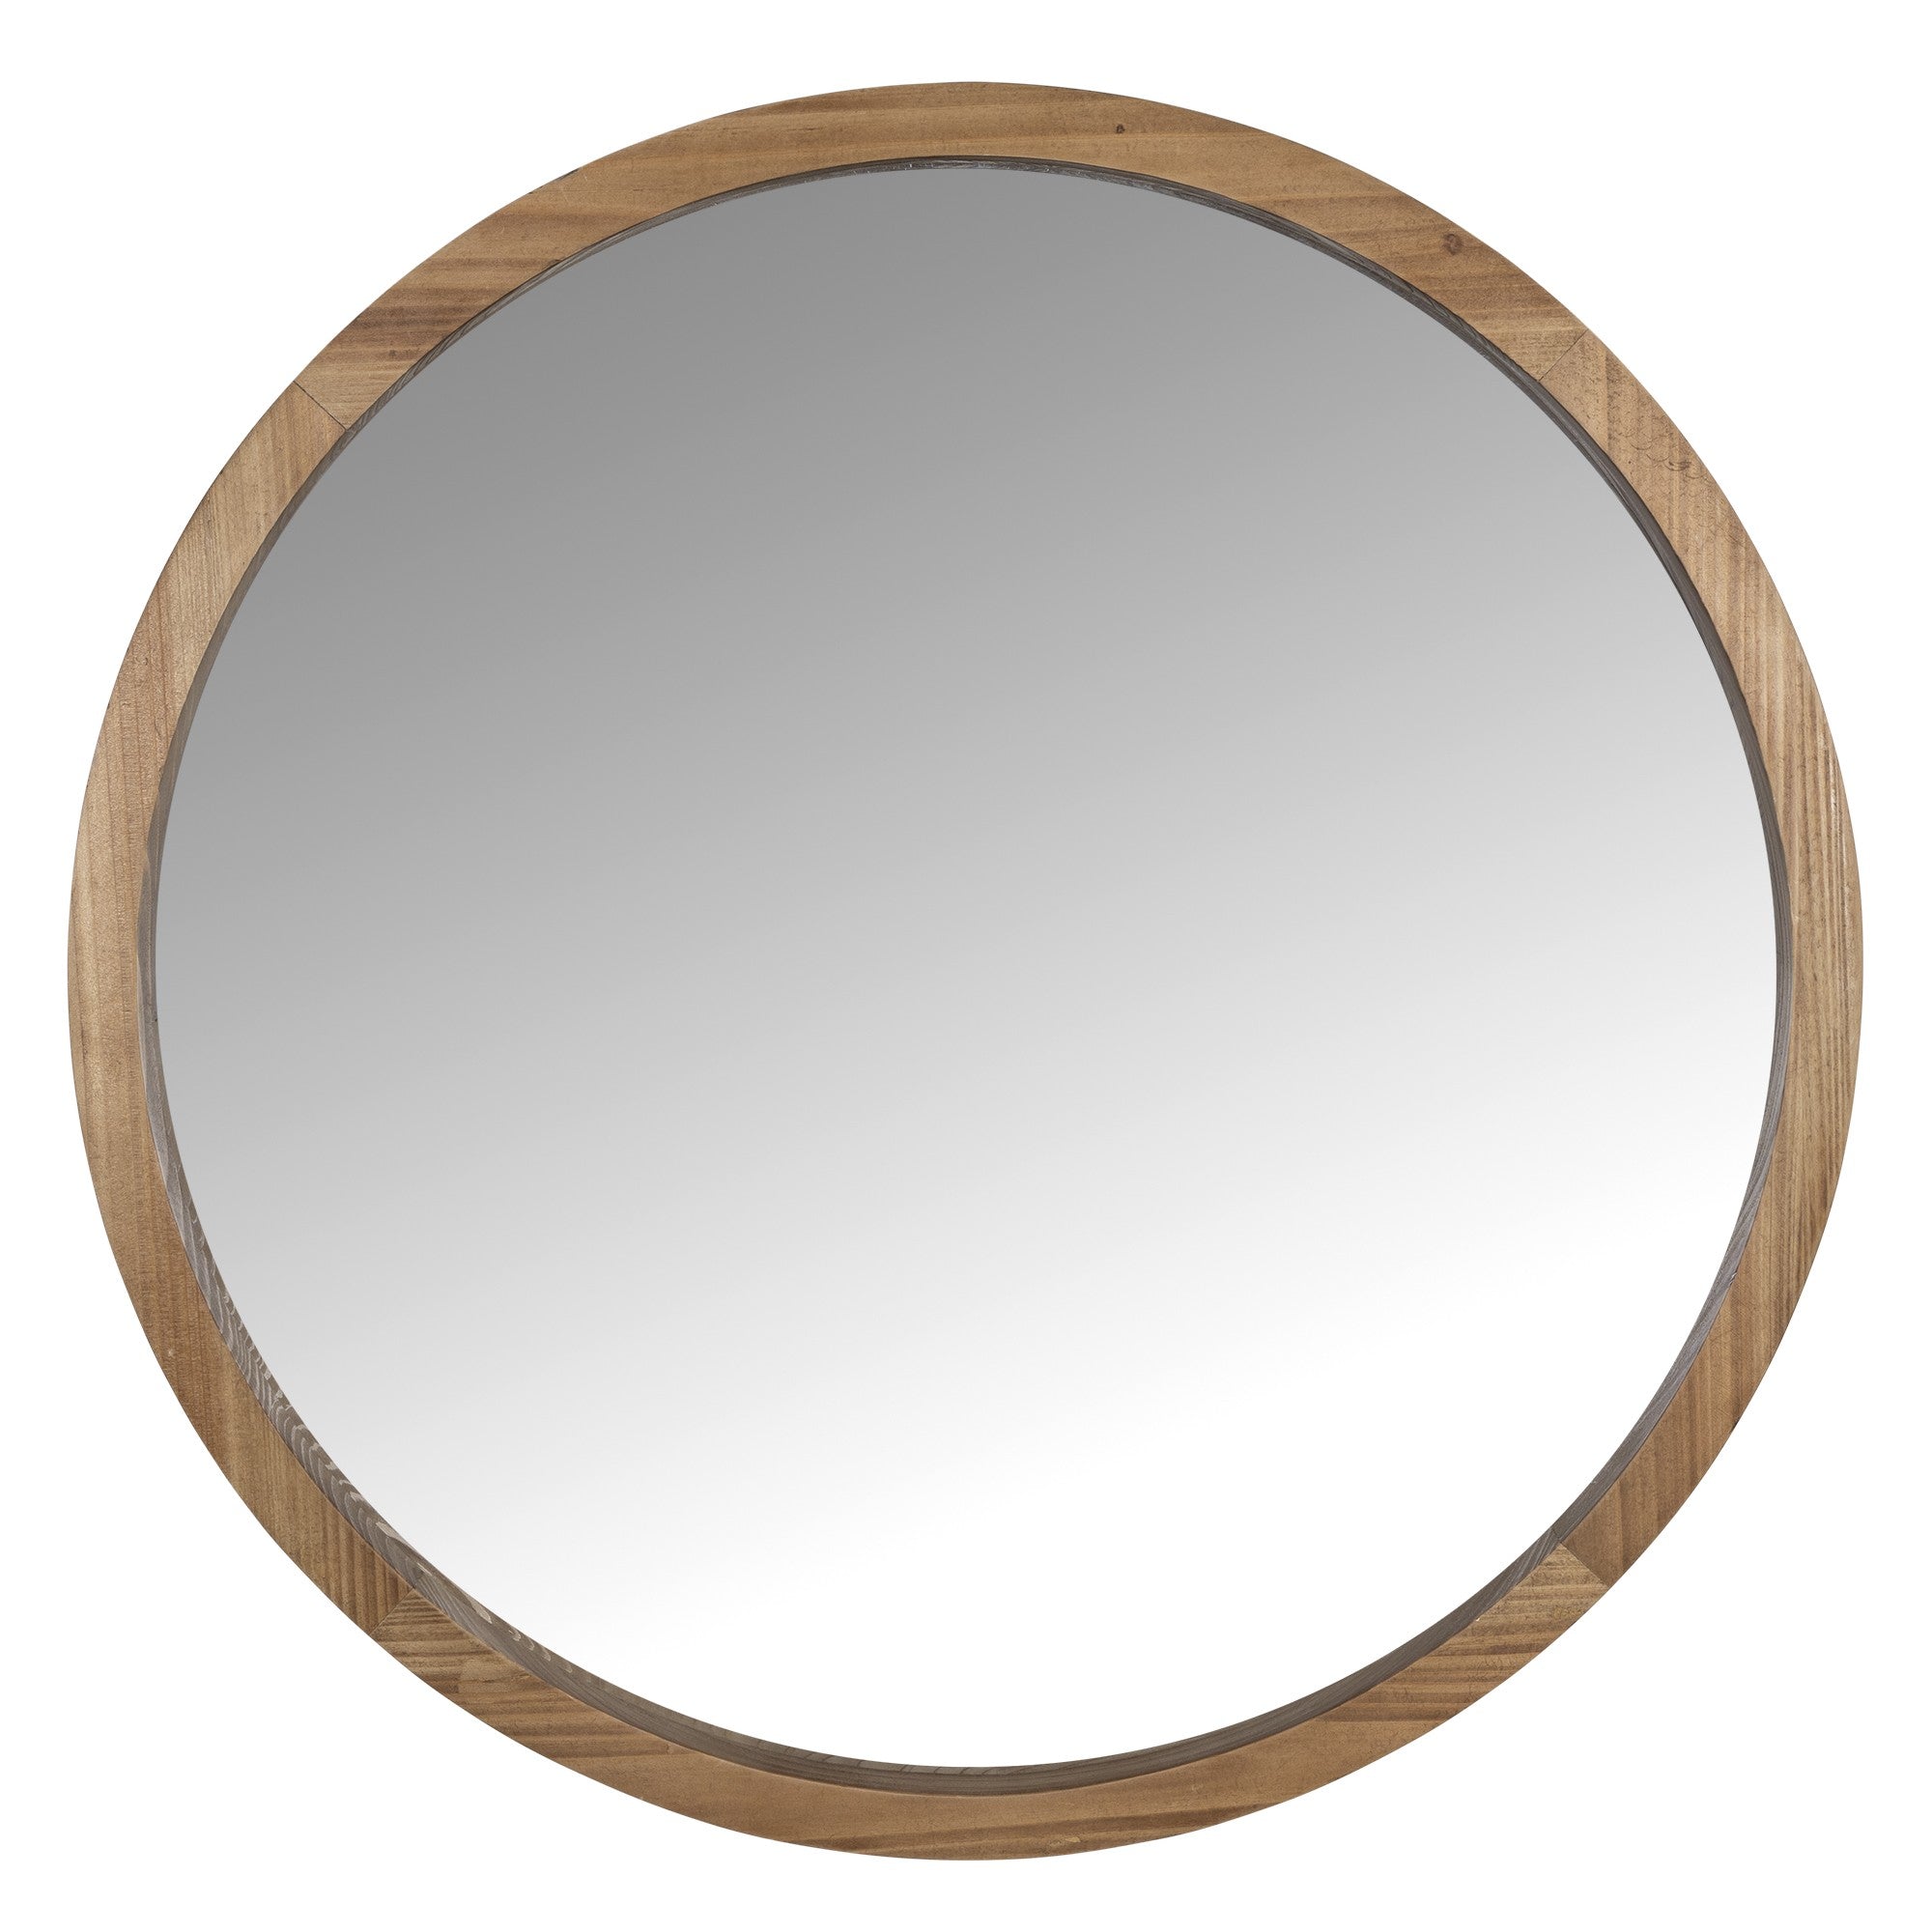 Simple Modern Round Wall Mirror